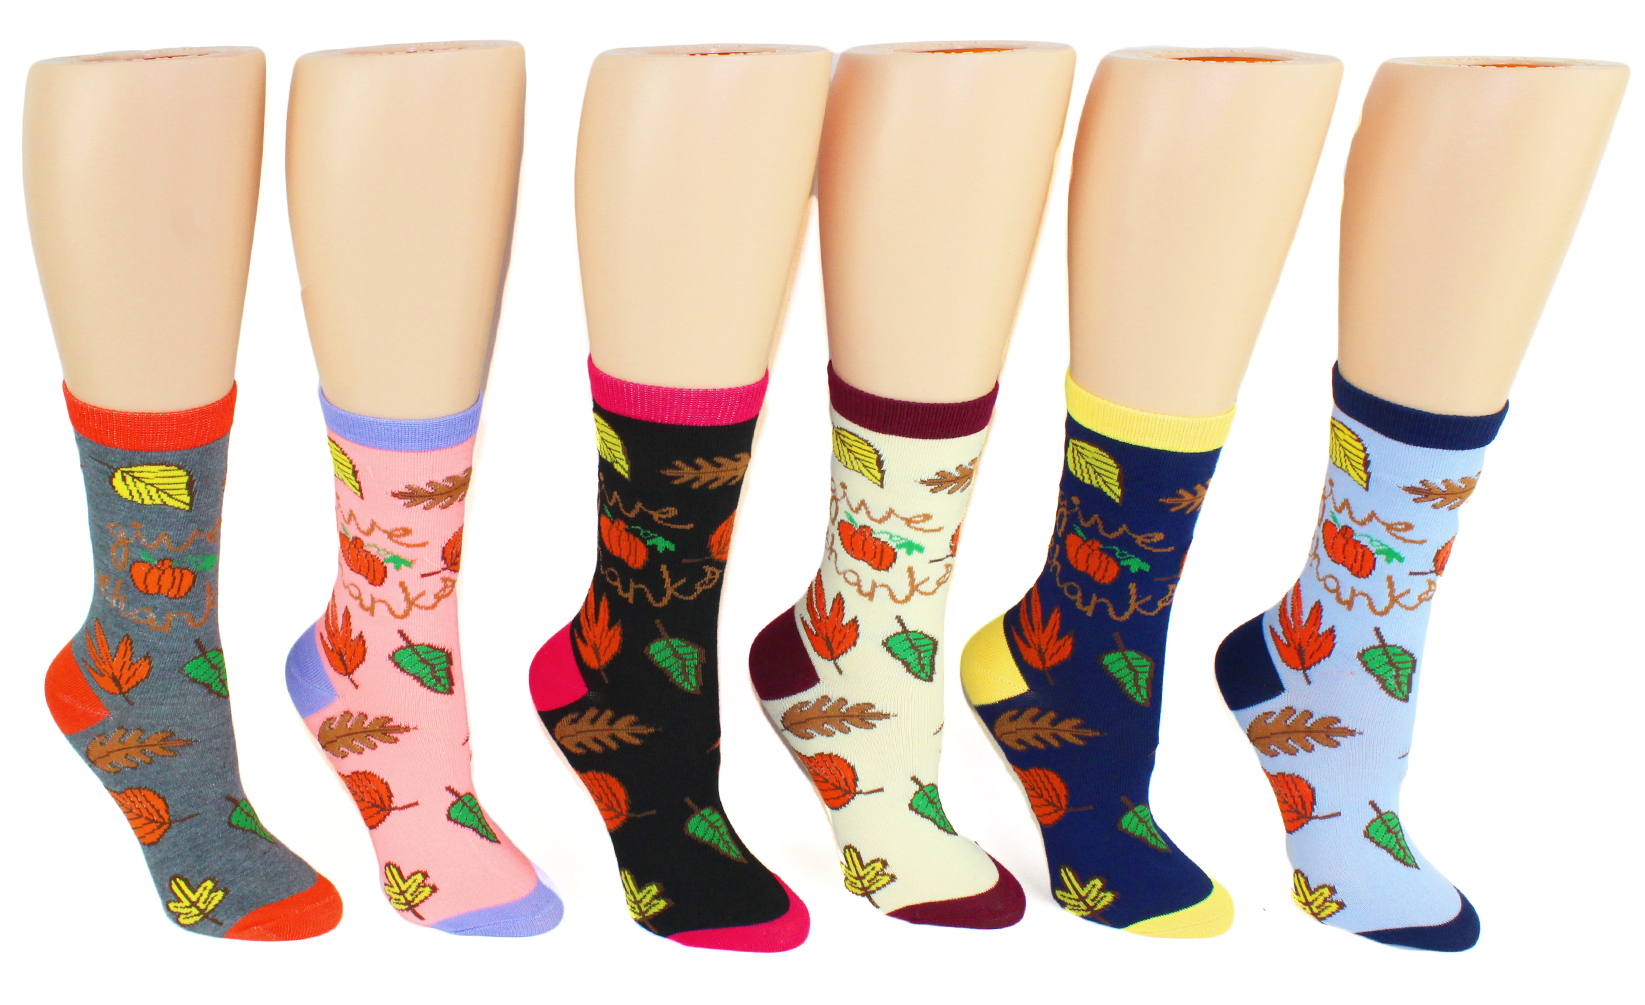 Women's Novelty Crew Socks - Thanksgiving Prints - Size 9-11